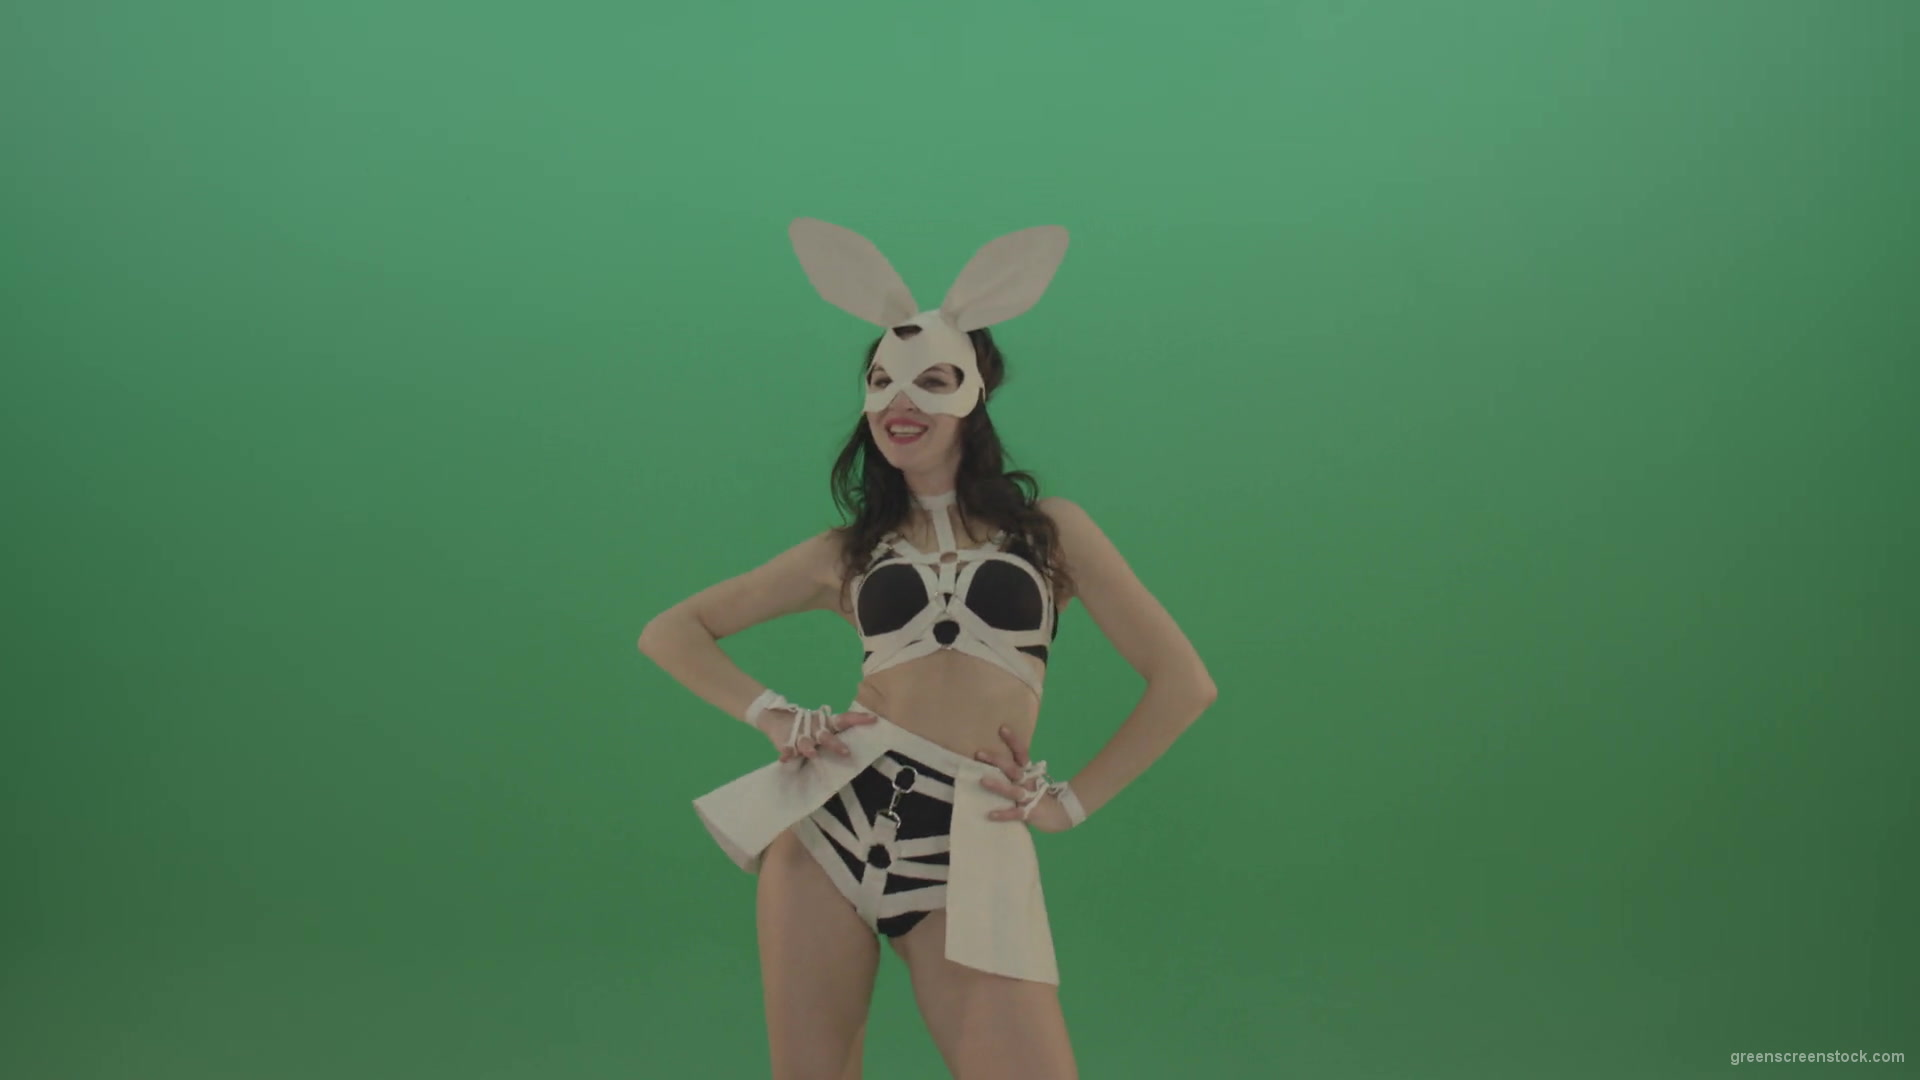 White-Rabbit-Girl-sexy-posing-dancing-in-bunny-style-over-Green-Screen-1920_007 Green Screen Stock